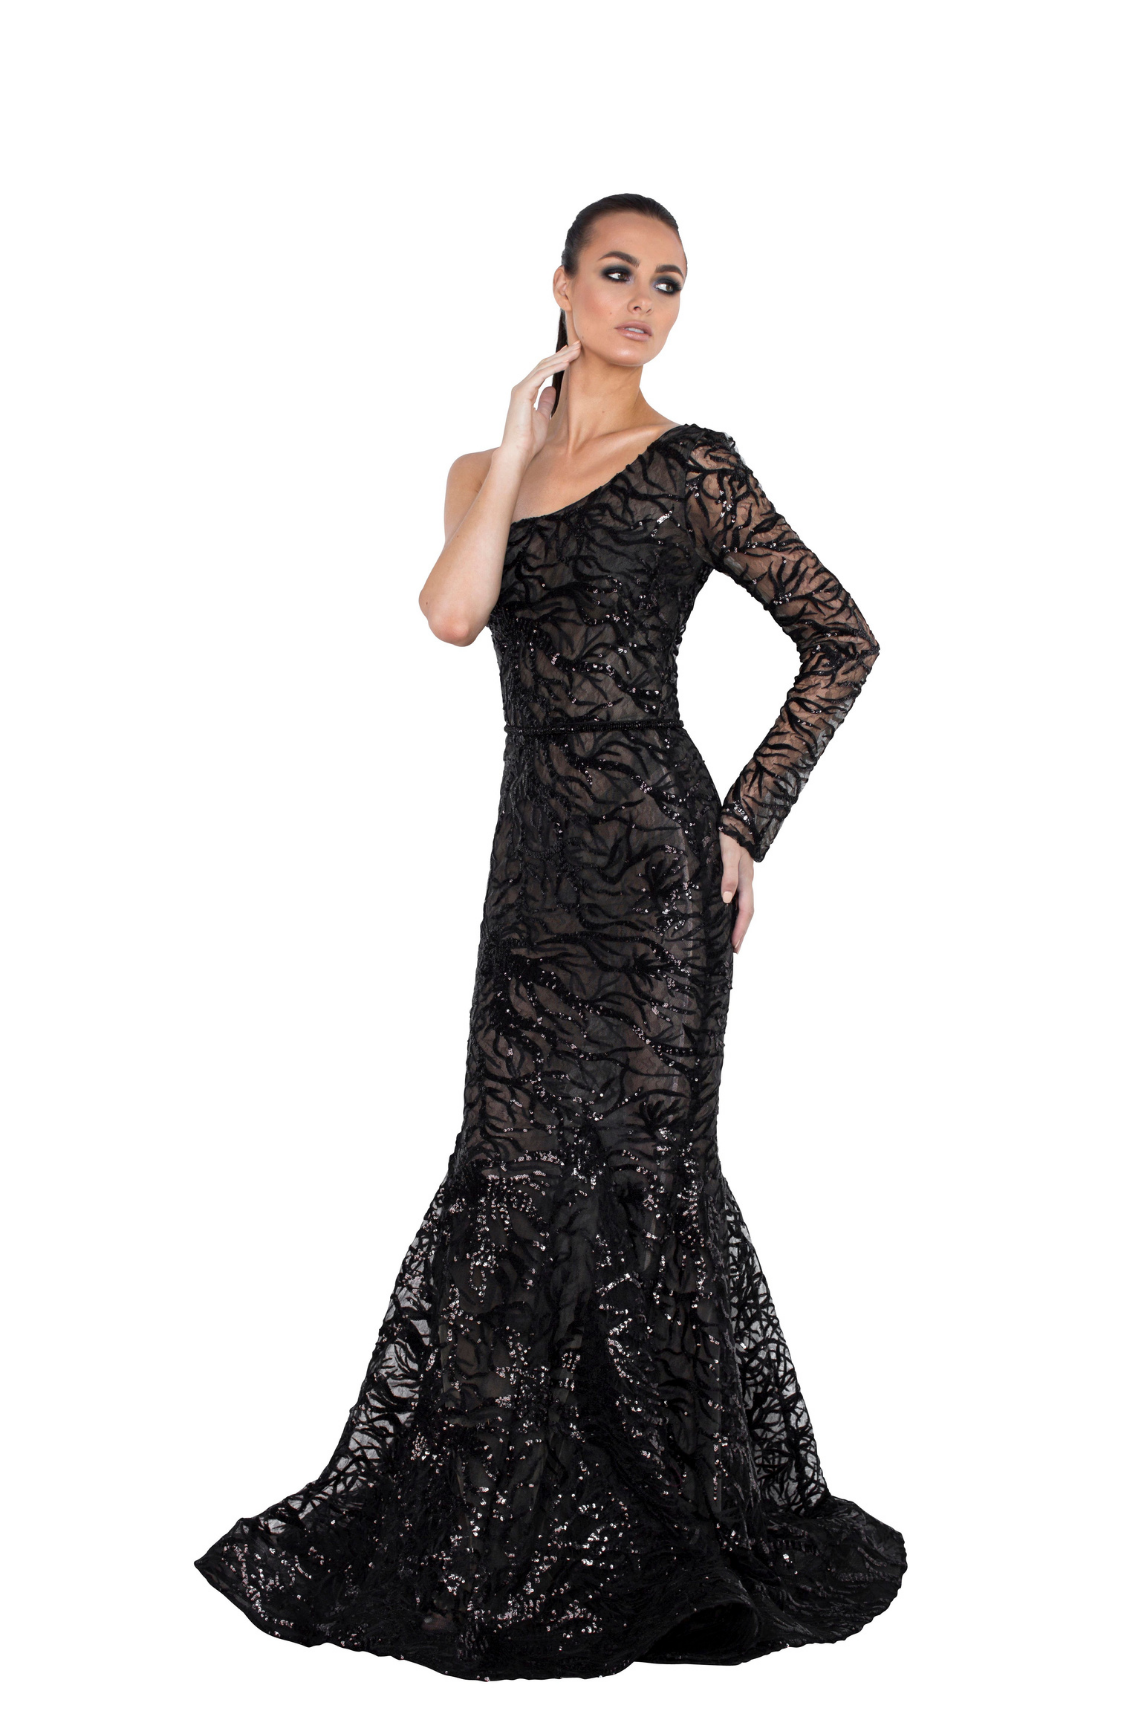 Model wearing a black evening dress